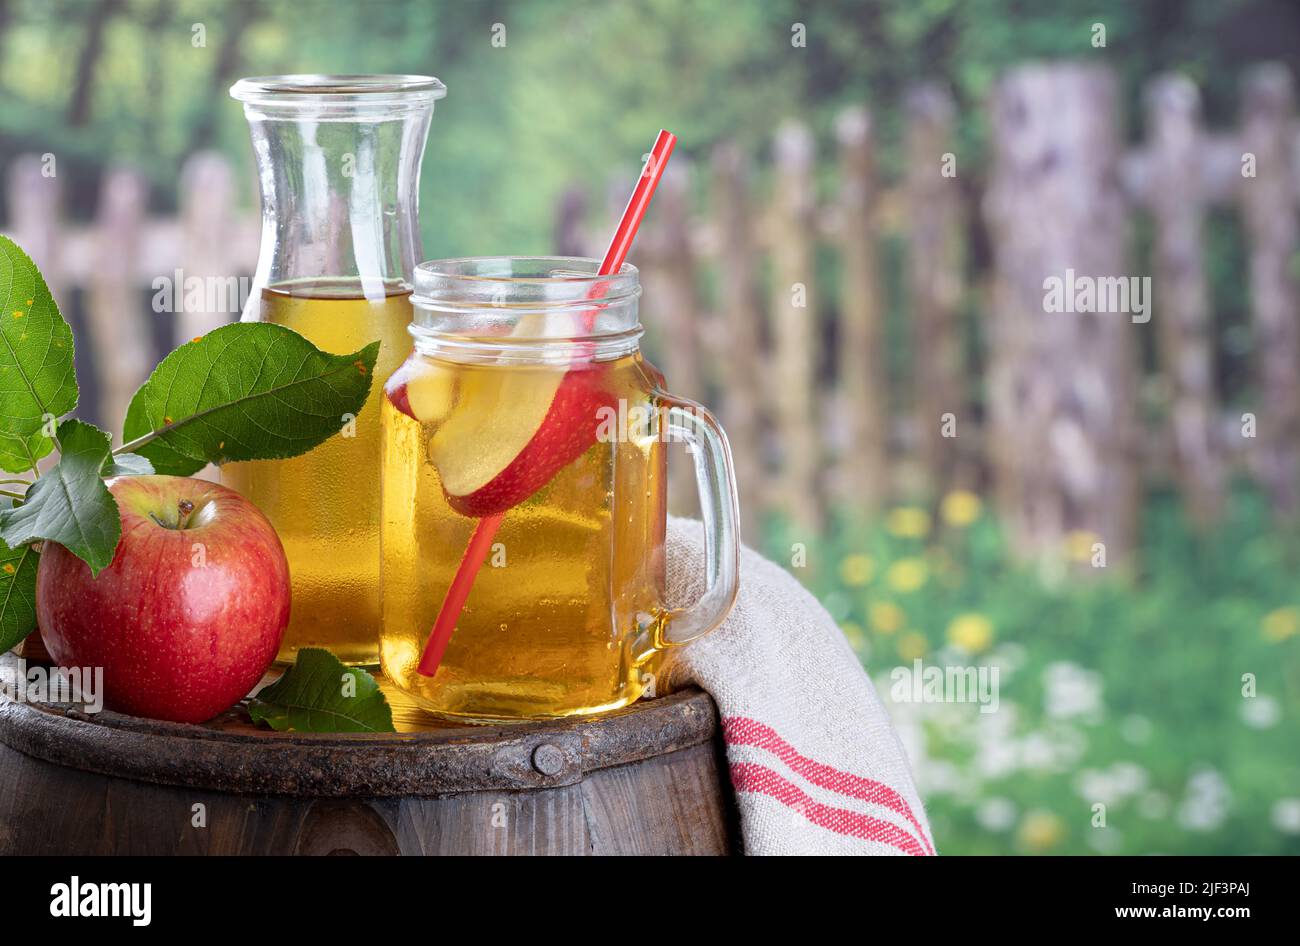 Vaso de zumo de manzana con rodaja de manzana sobre un viejo barril de madera con fondo rural Foto de stock